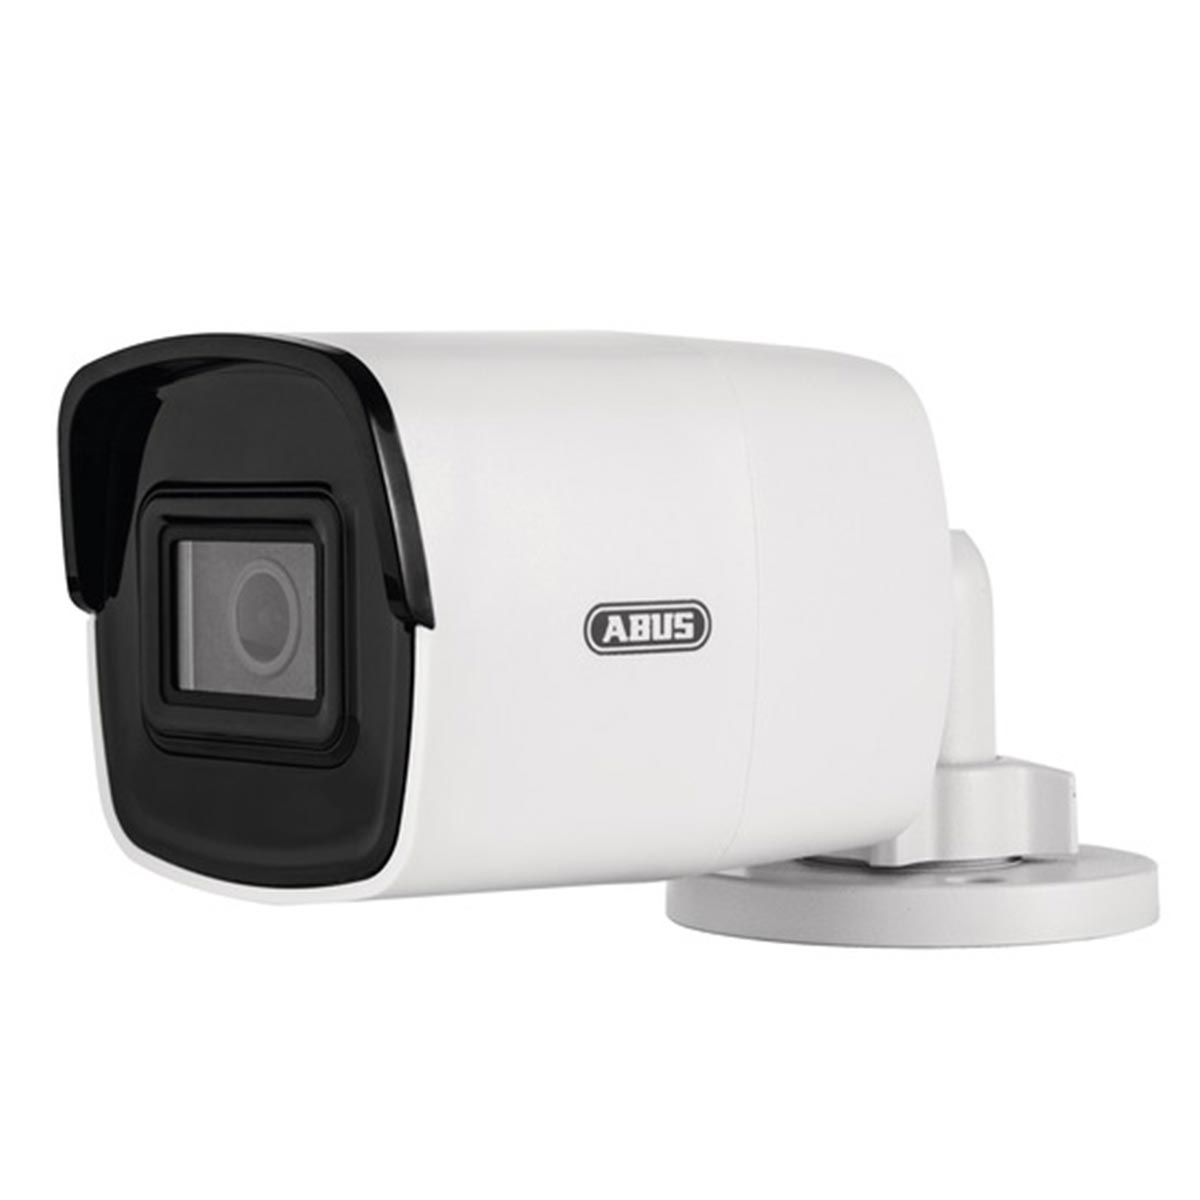 ABUS ABUS TVIP62510, Netzwerk-Überwachungskamera